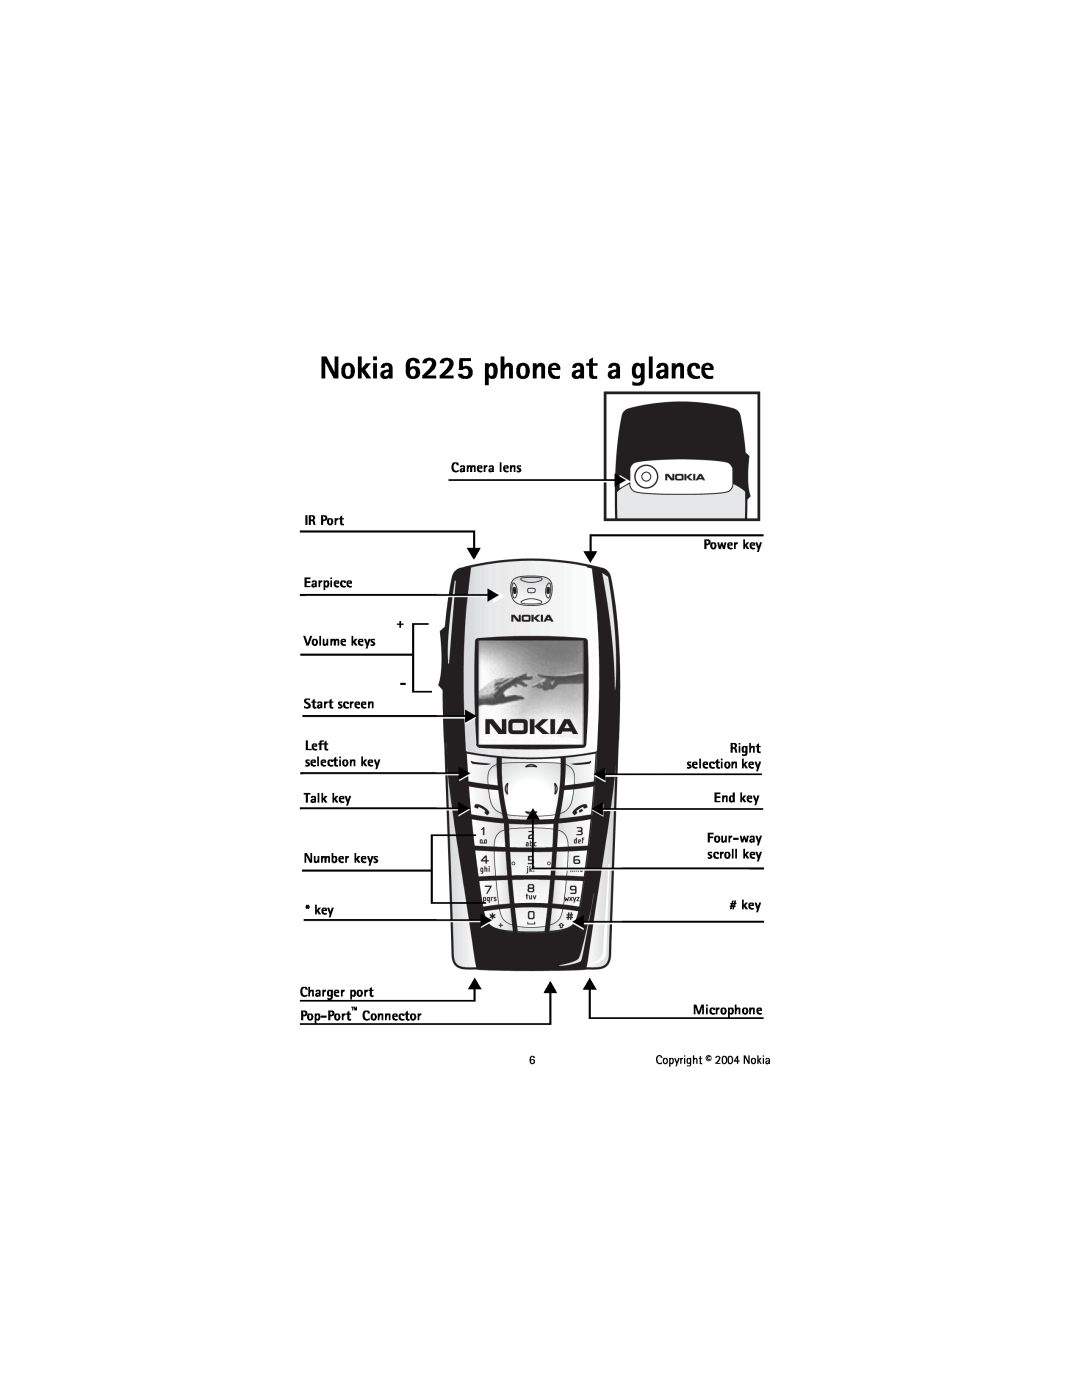 Nokia Nokia 6225 phone at a glance, Camera lens IR Port Earpiece + Volume keys, Start screen, Talk key Number keys 